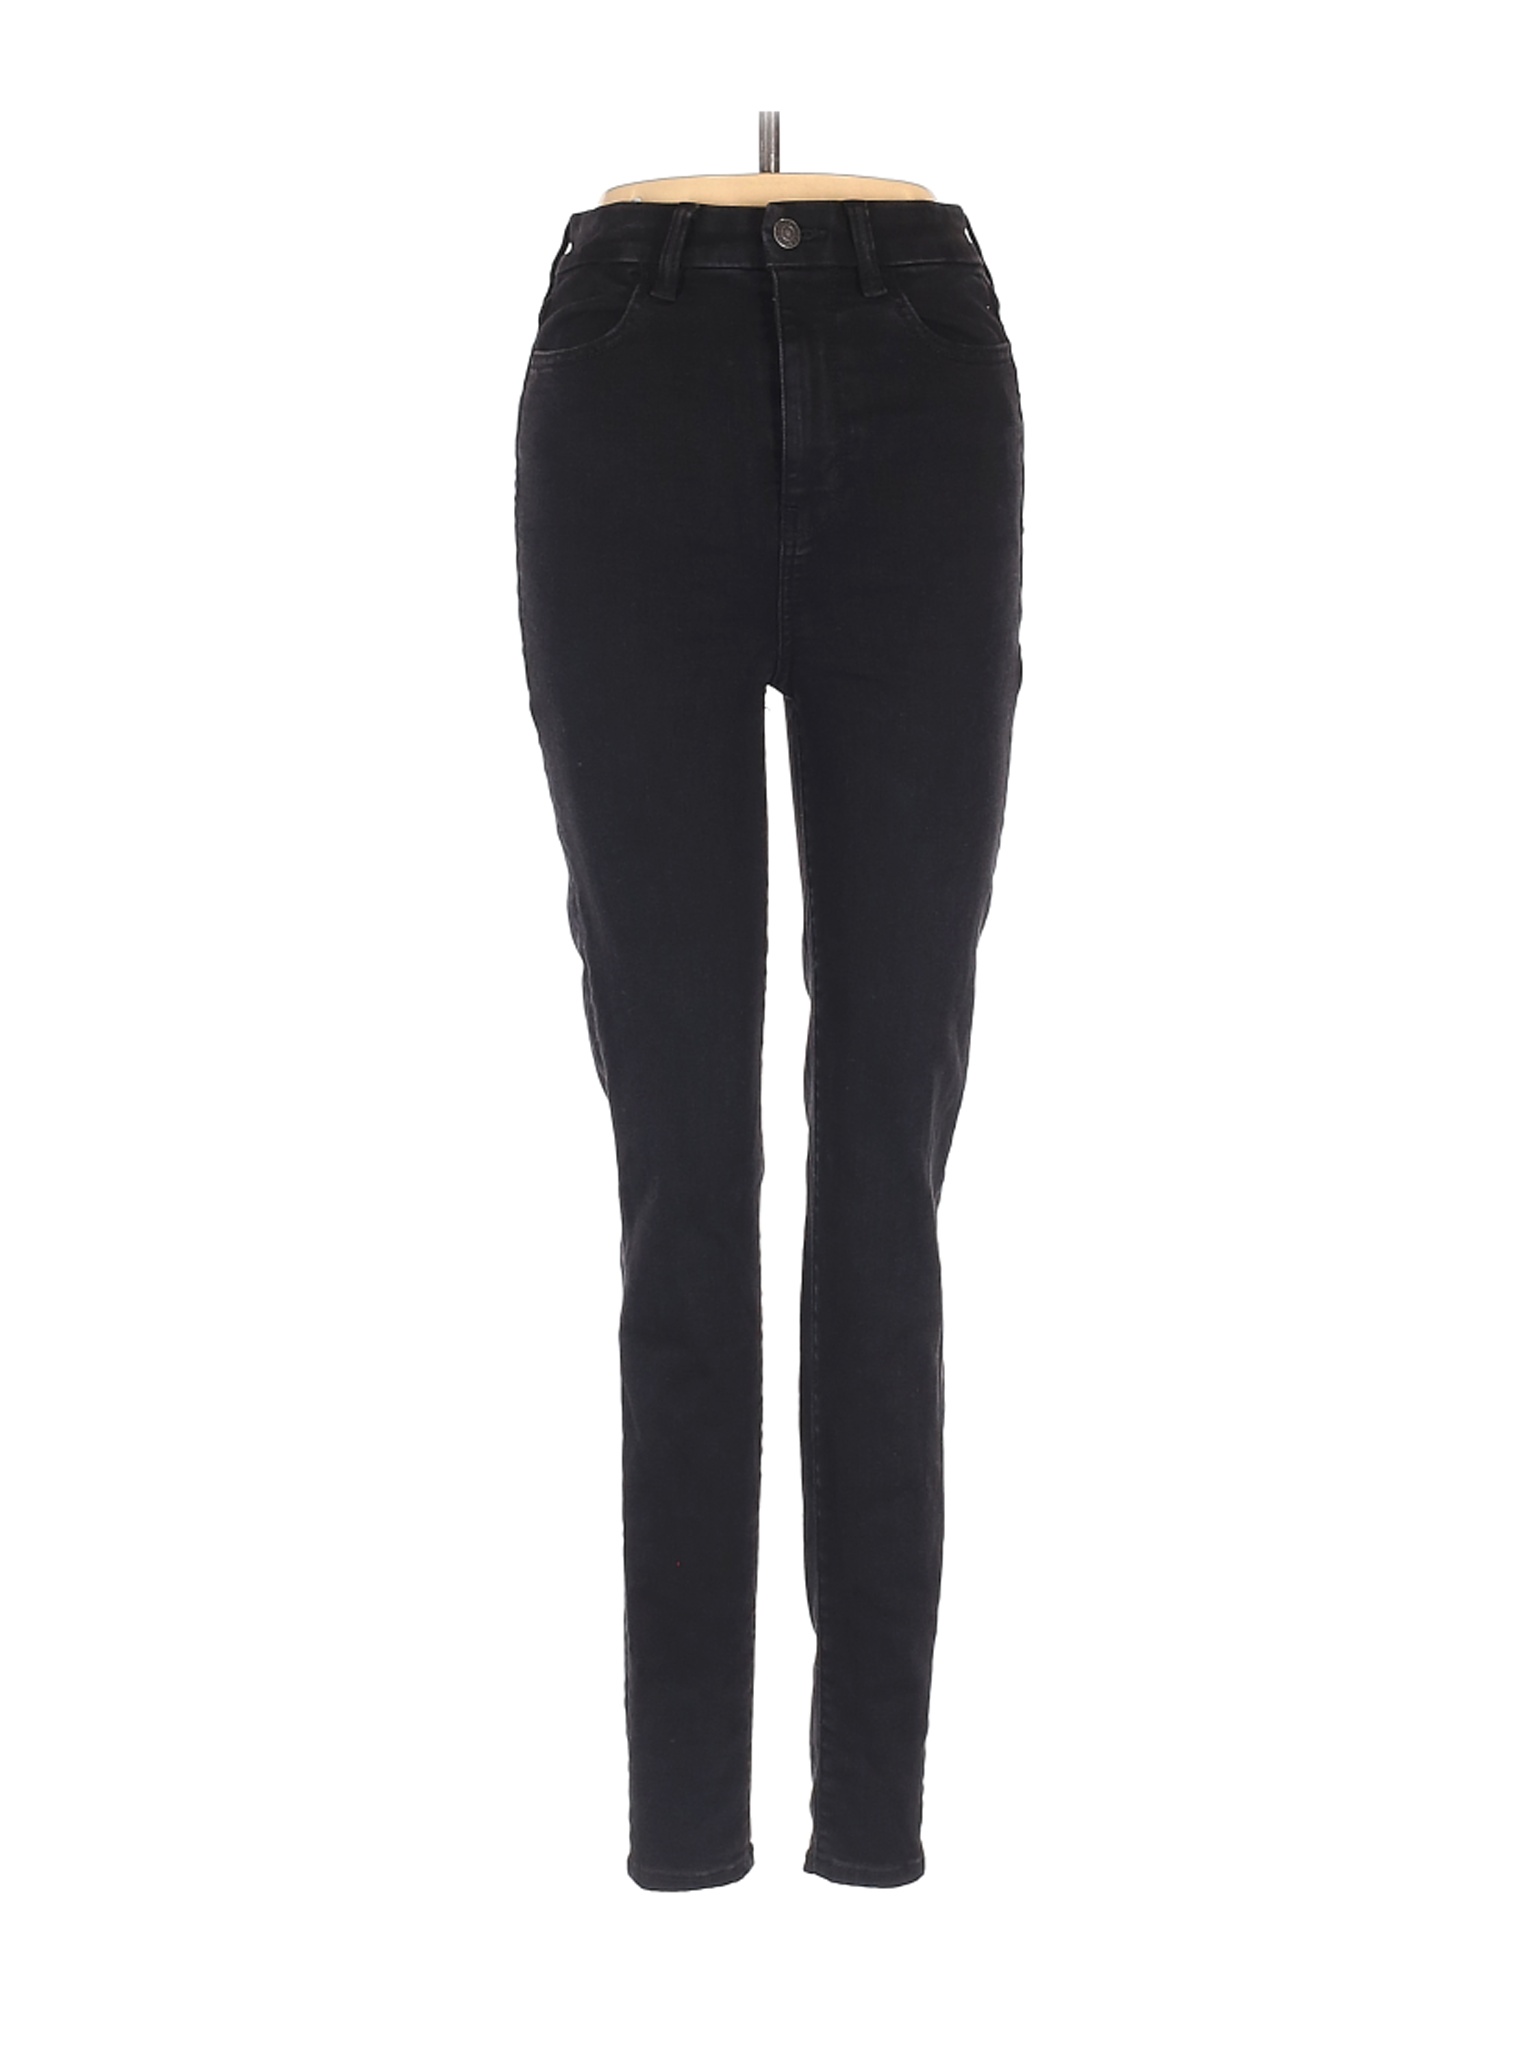 American Eagle Outfitters Women Black Jeans 2 | eBay